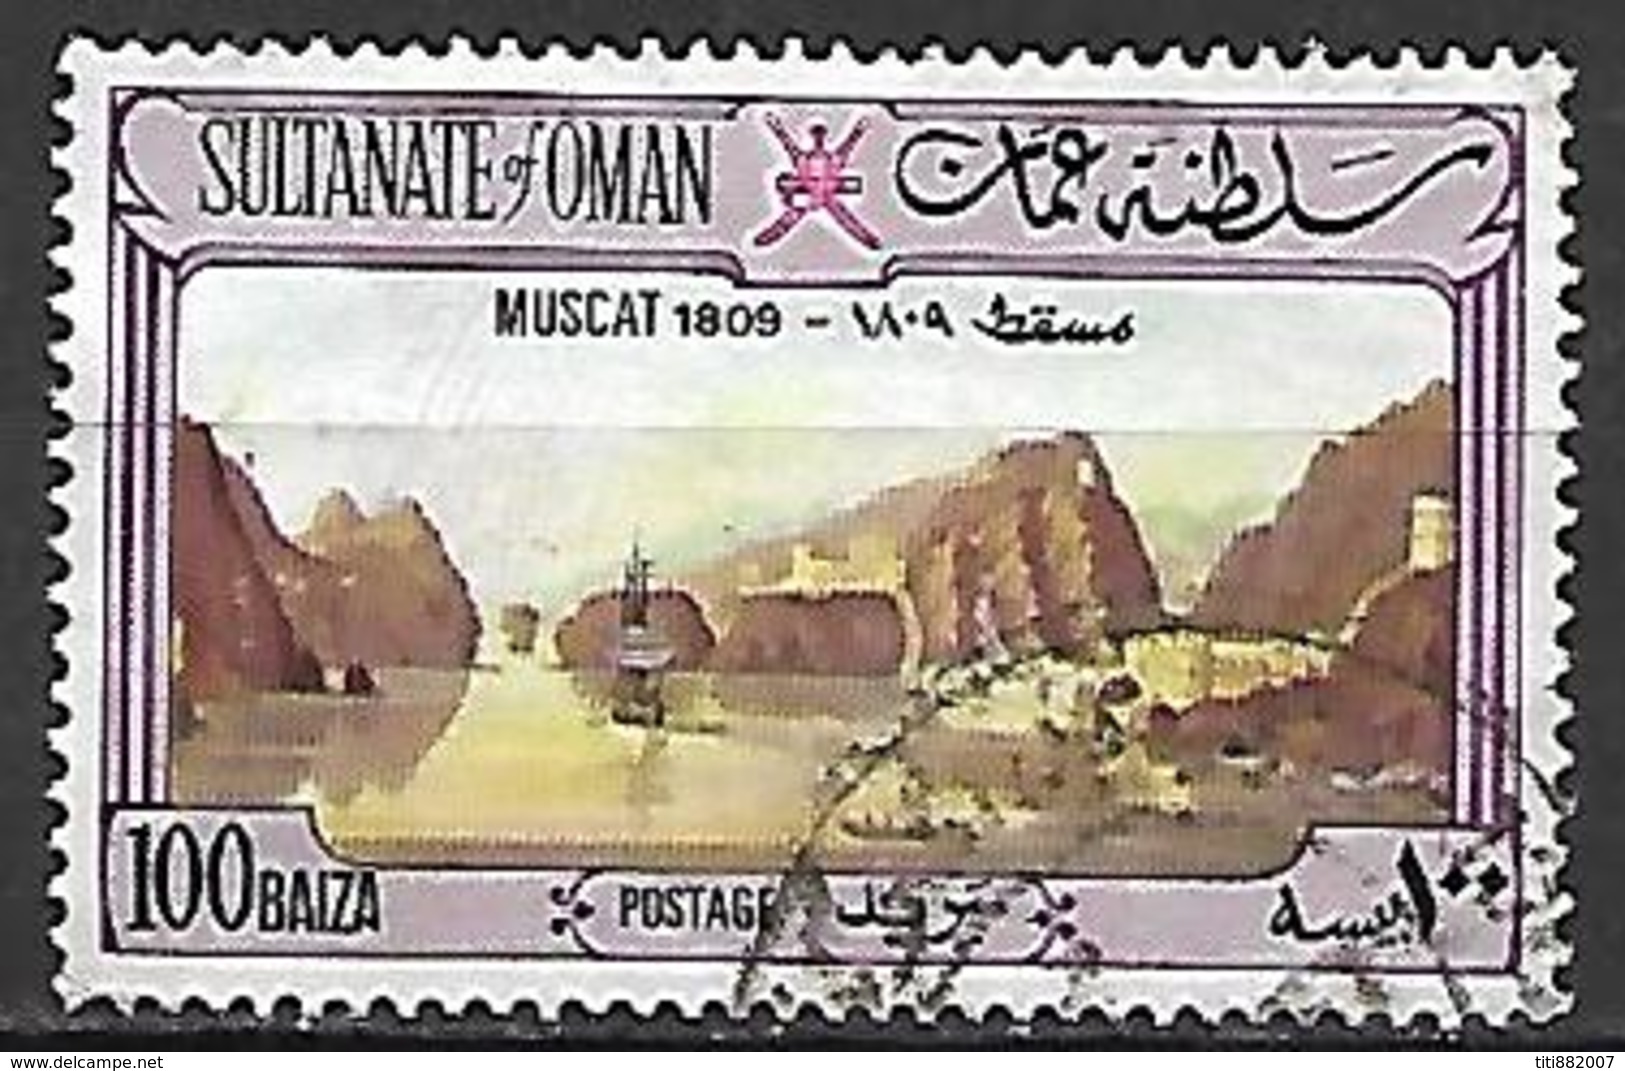 OMAN    -   Vue De Muscat En 1809  -   Bateau - Oman